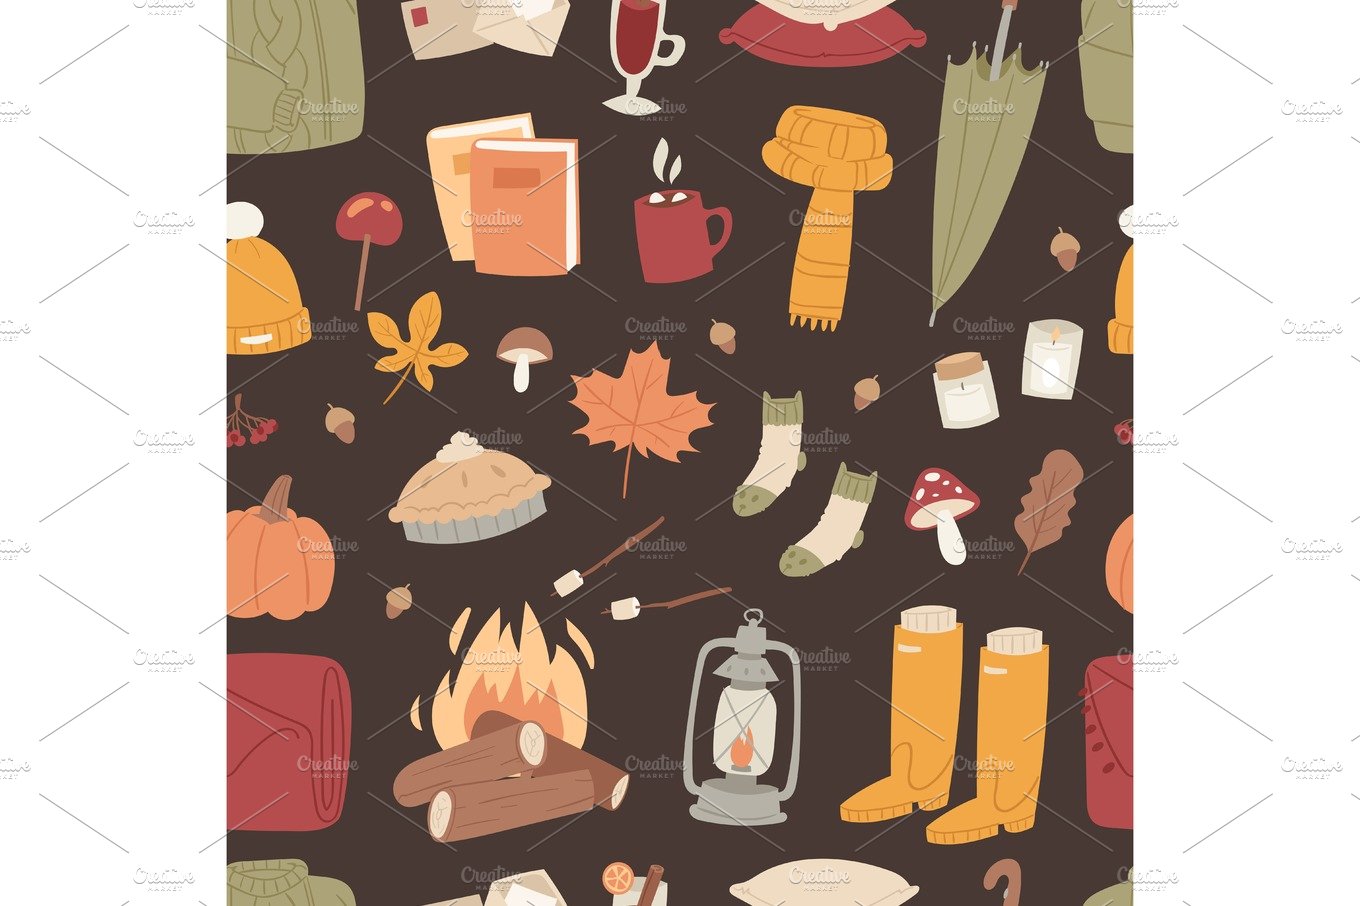 Autumn season icons symbol vector illustration seamless pattern background cover image.